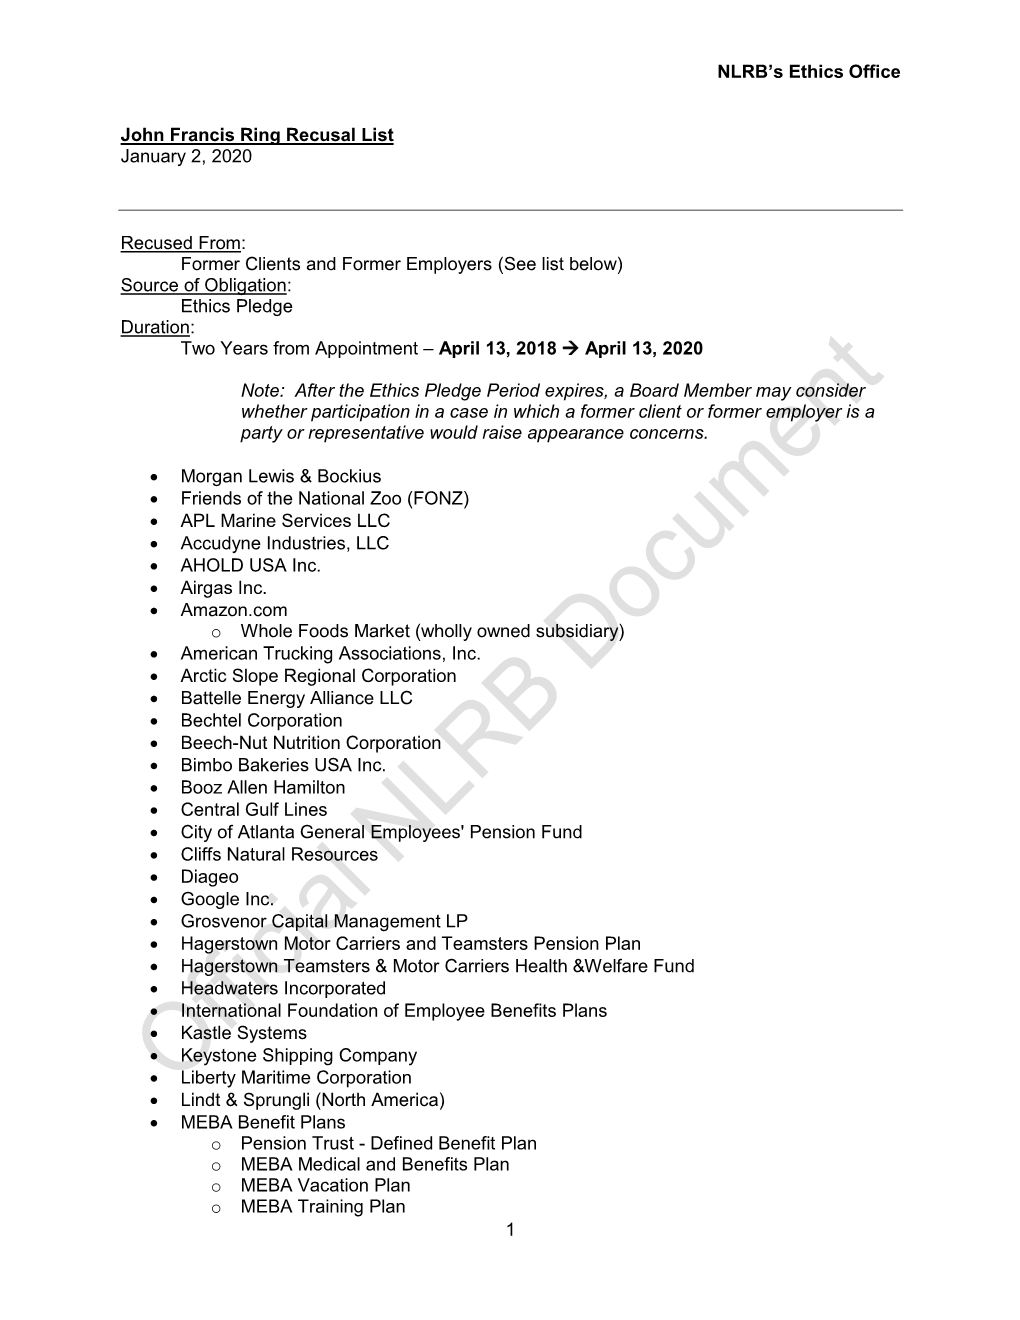 NLRB's Ethics Office John Francis Ring Recusal List January 2, 2020